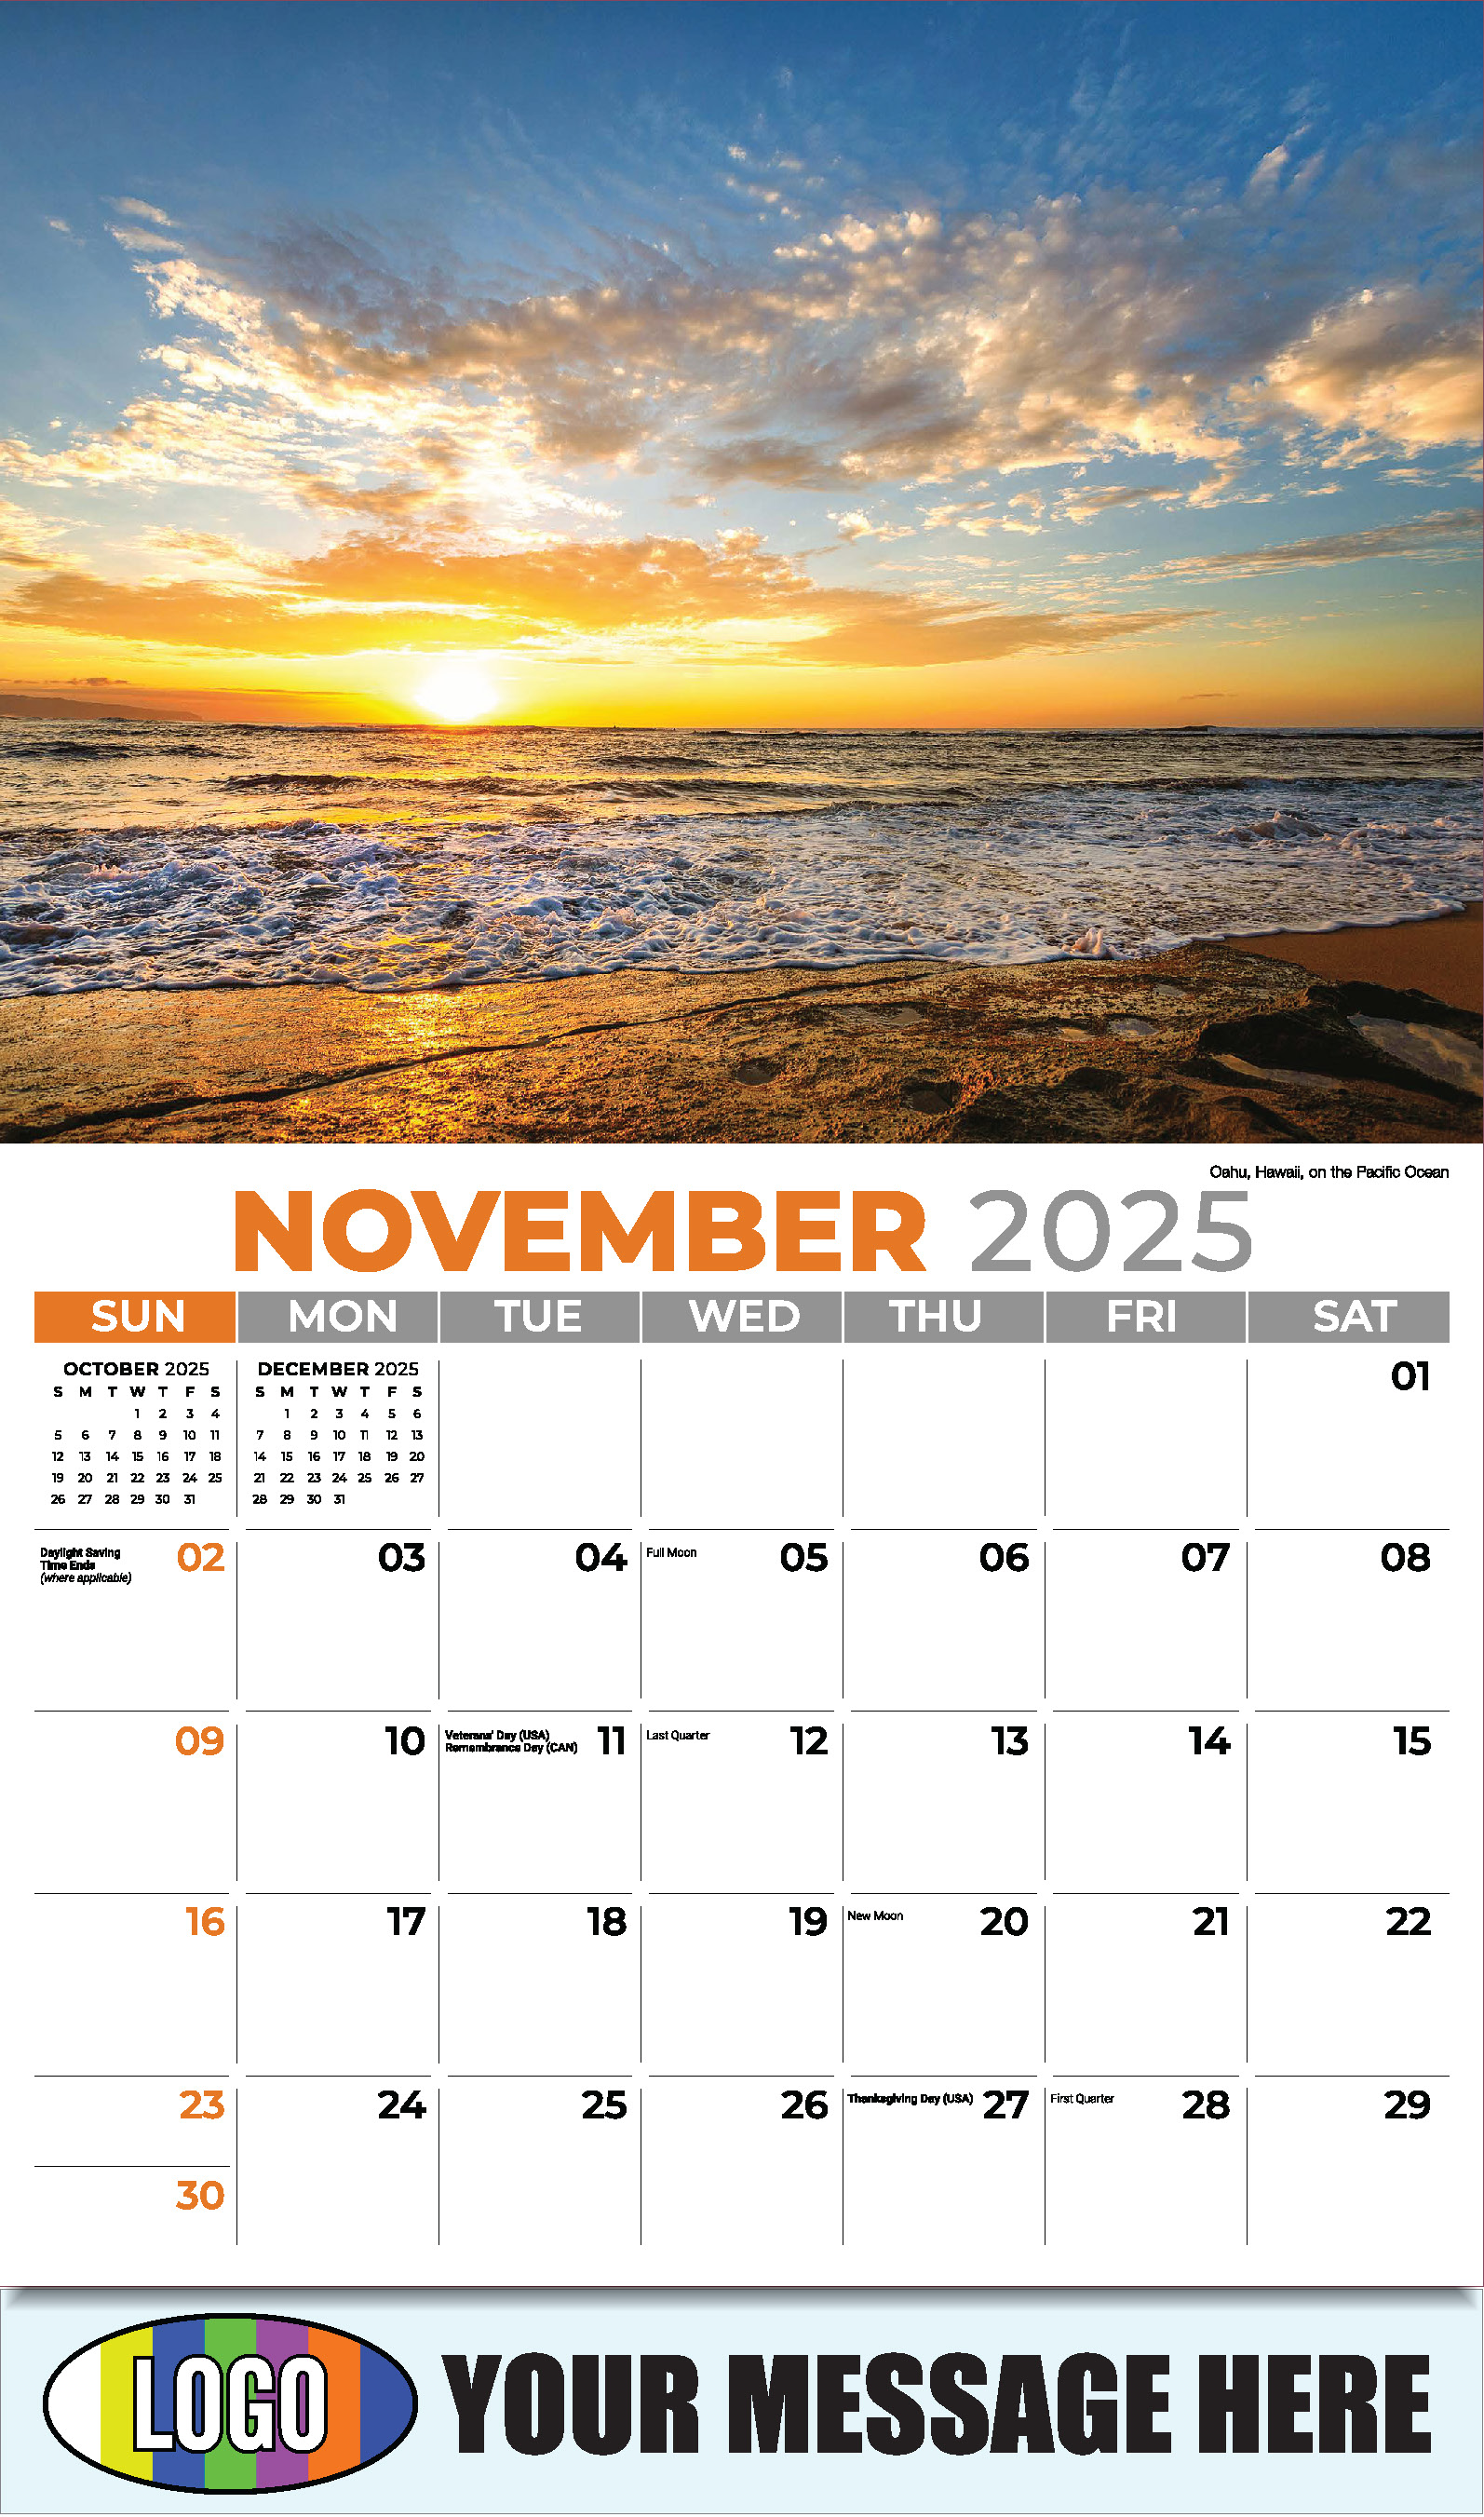 Sun, Sand and Surf 2025 Business Advertsing Wall Calendar - November